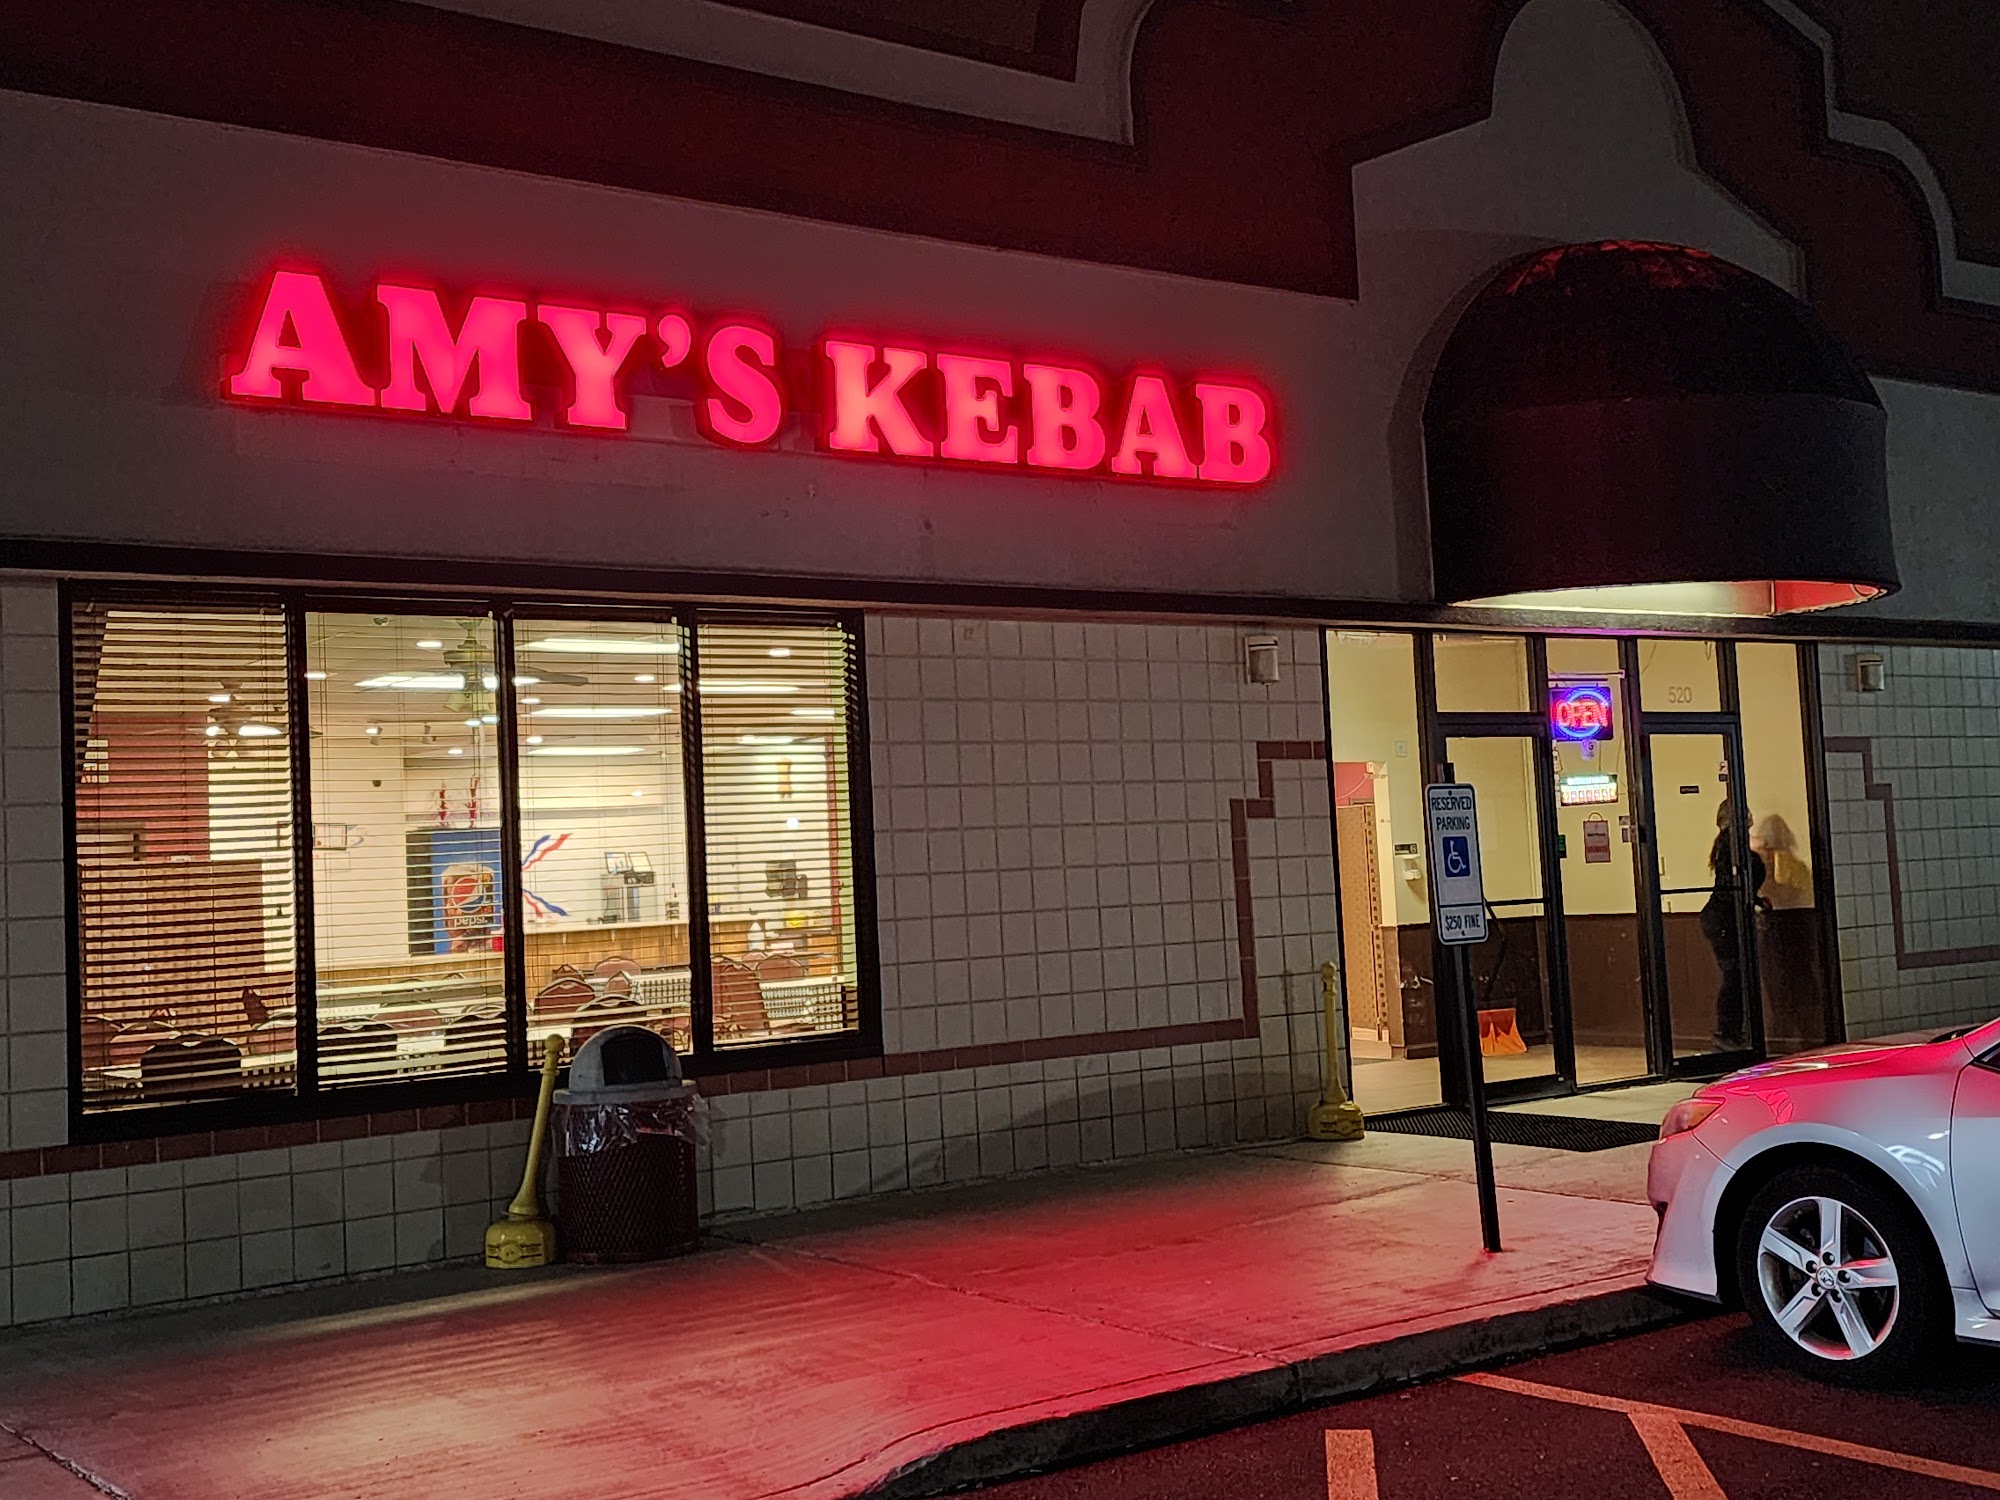 Amy's Kebab